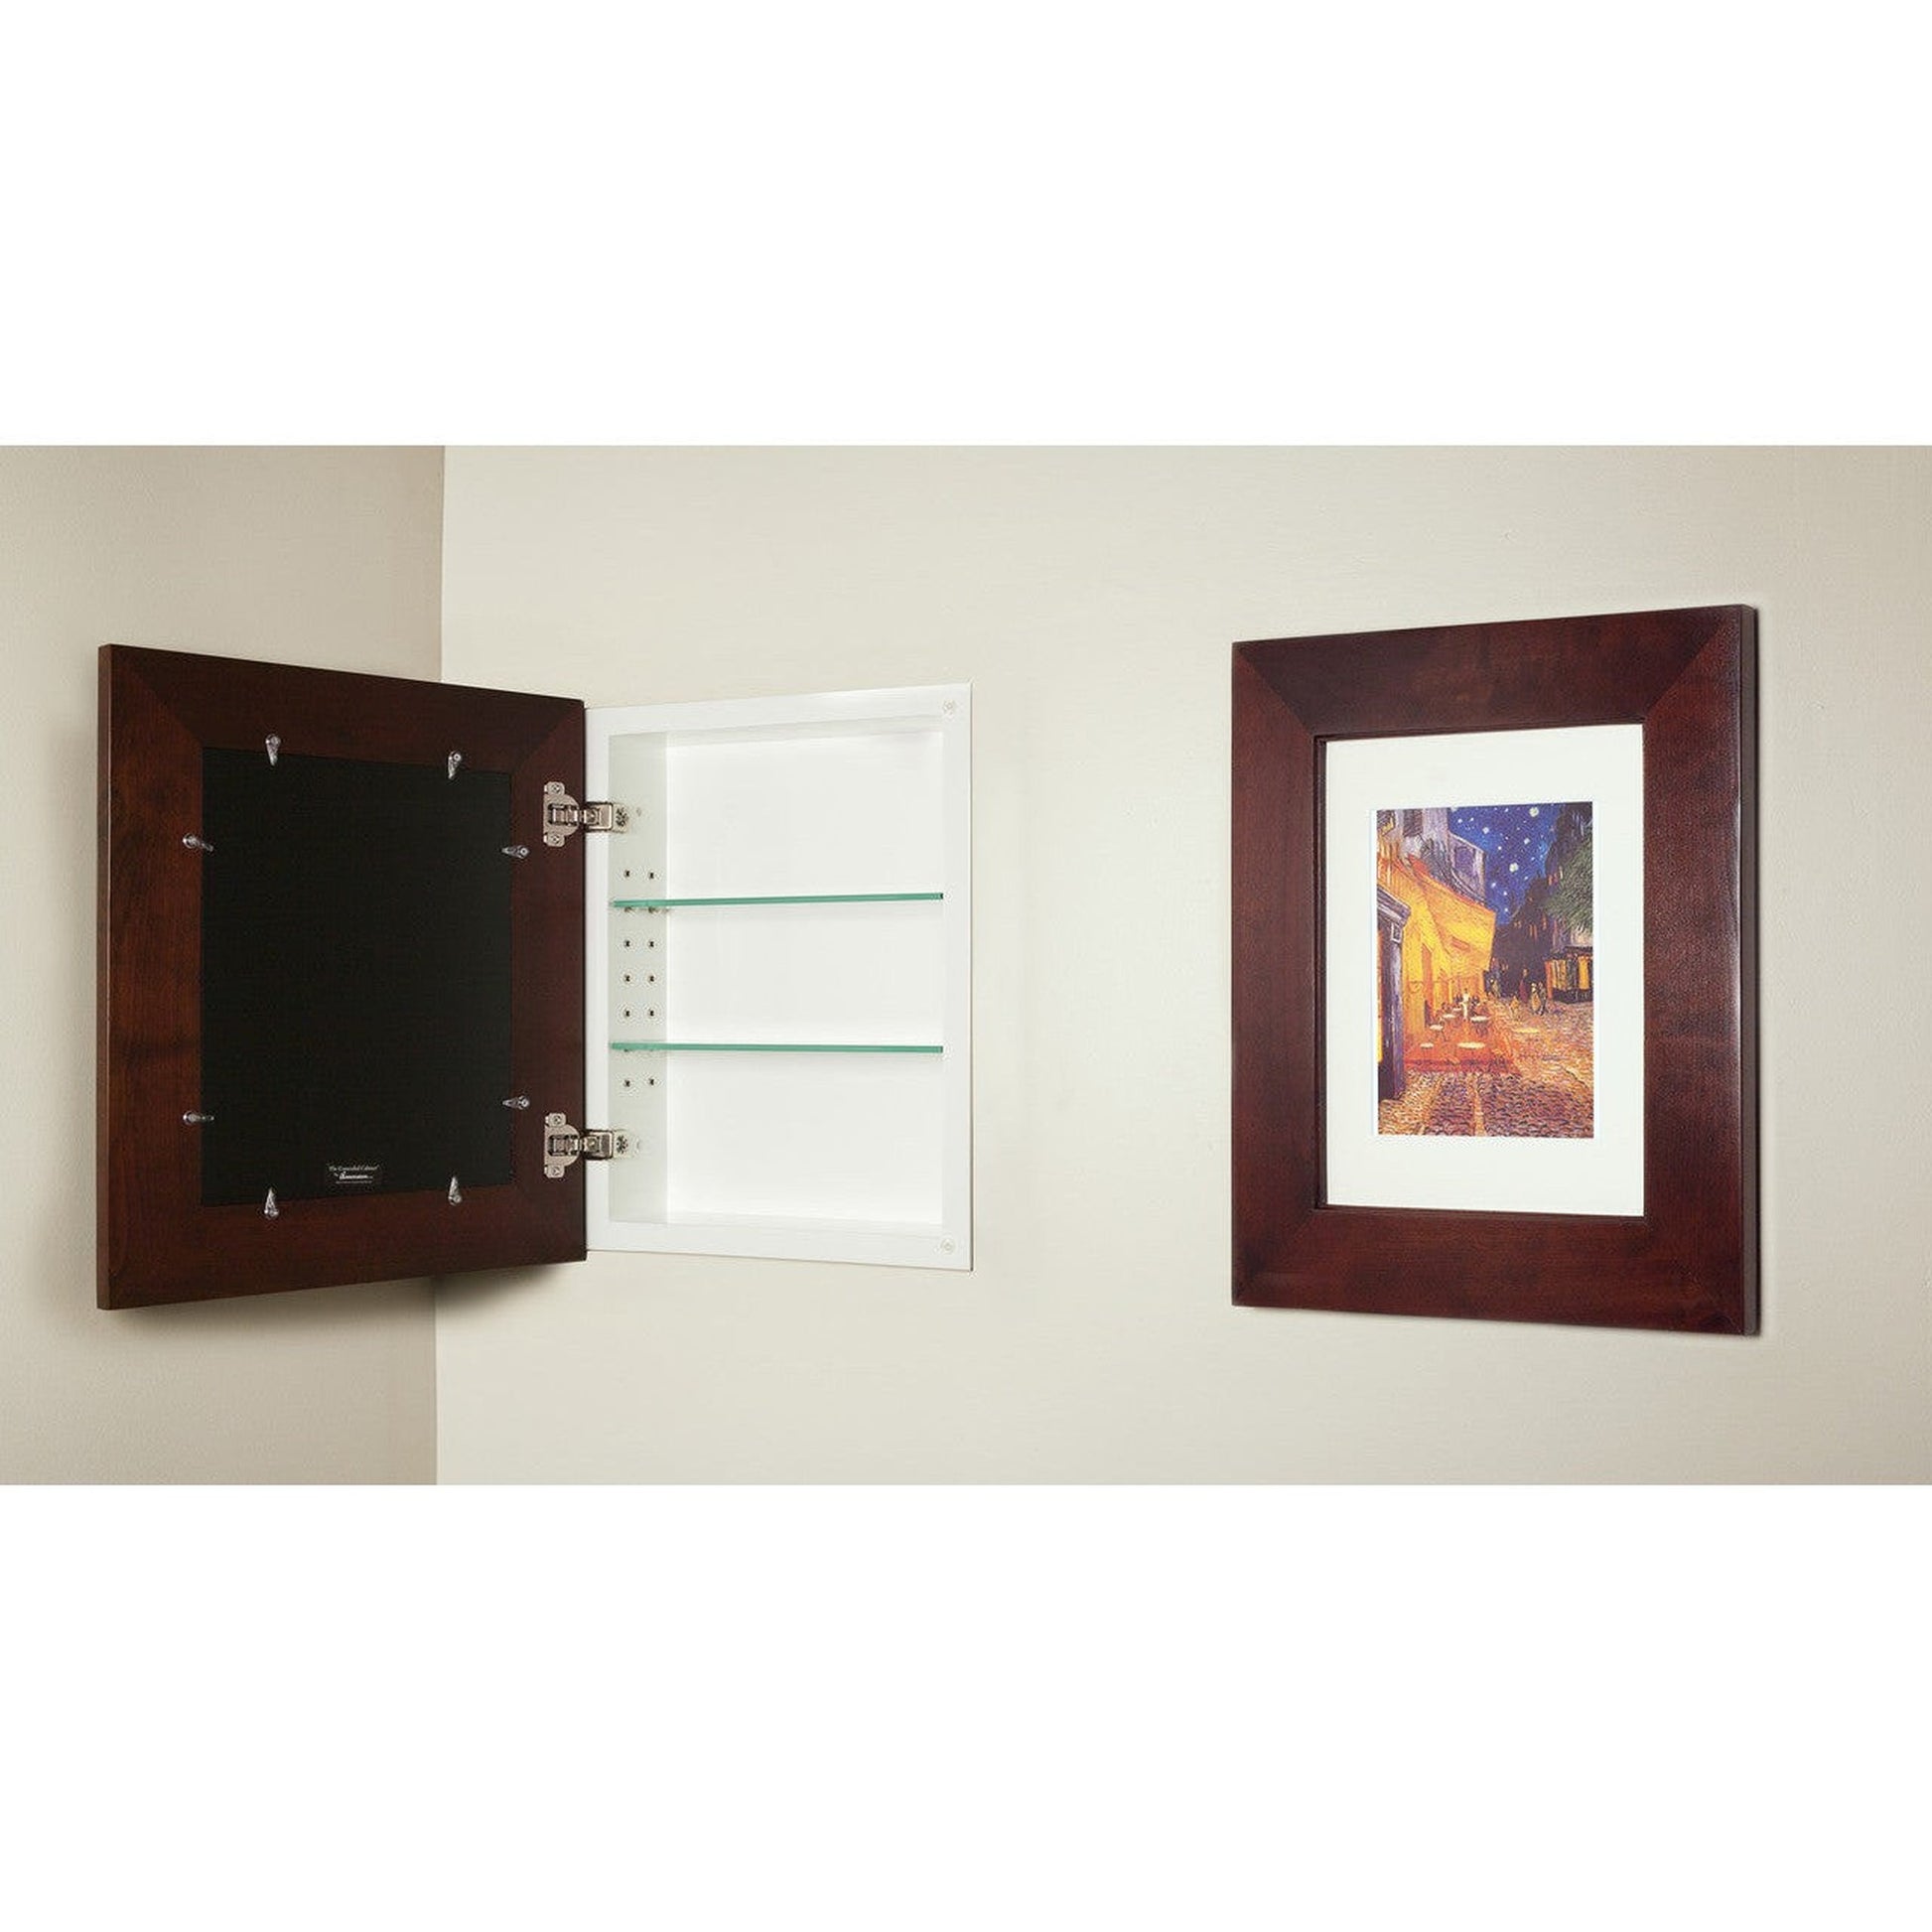 Fox Hollow Furnishings 14" x 18" Large Espresso White Interior Recessed Picture Frame Medicine Cabinet